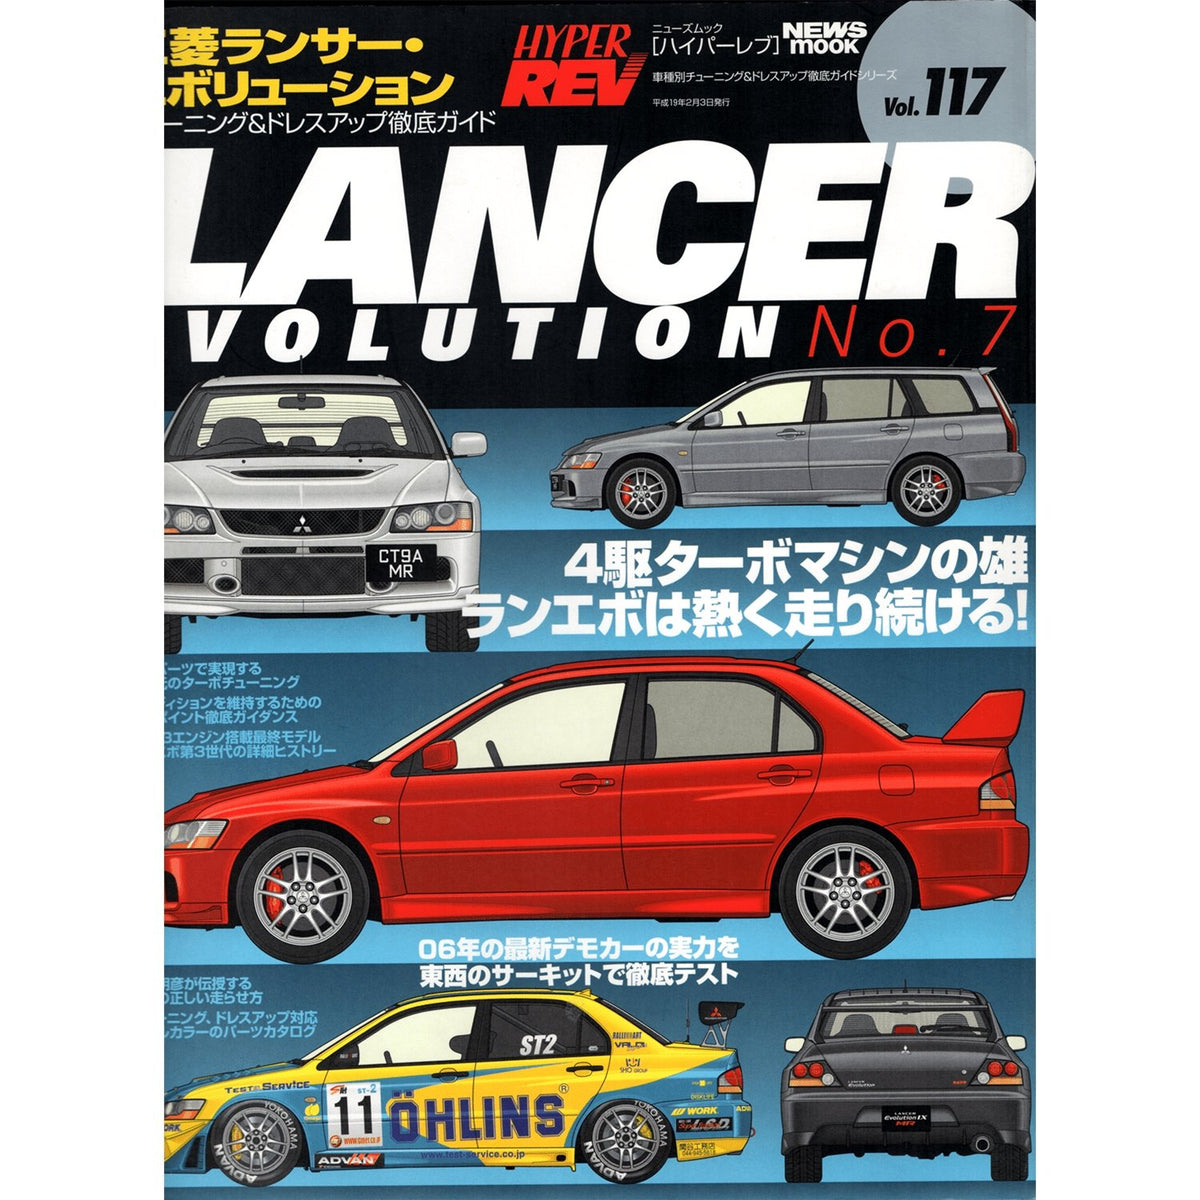 JDM Mitsubishi Lancer Evolution No.7 Hyper REV 117 Tuning & Dress up Guide Car Book - Sugoi JDM